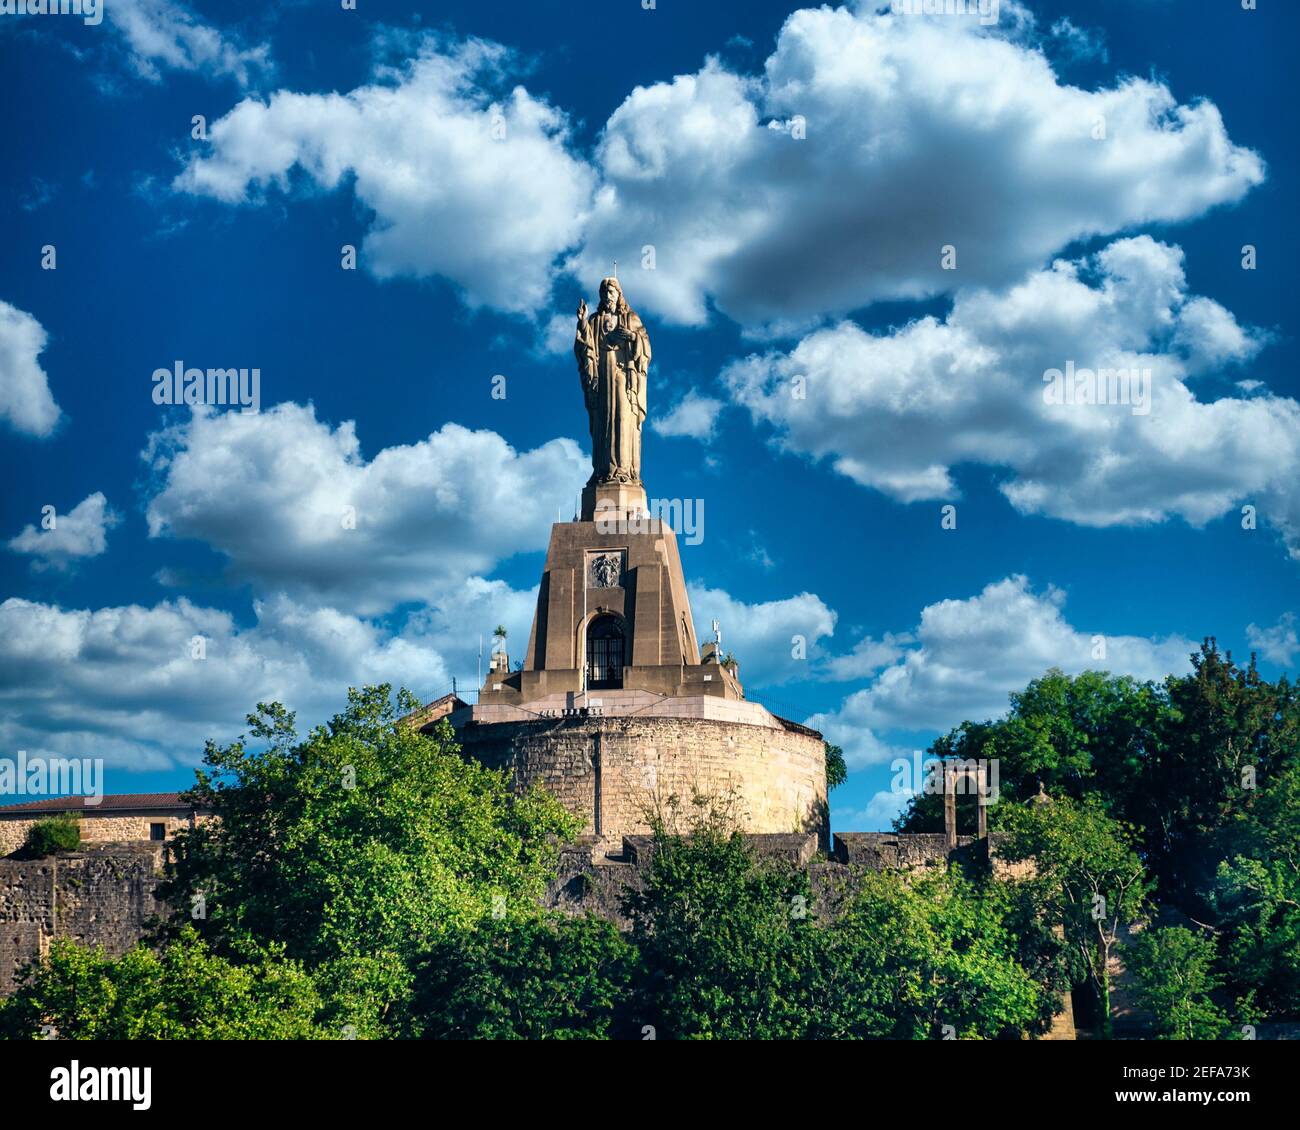 big statue of Jesus in San Sebastian, in Urgull mountain, overlooking the city, San Sebastian, Spain Stock Photo